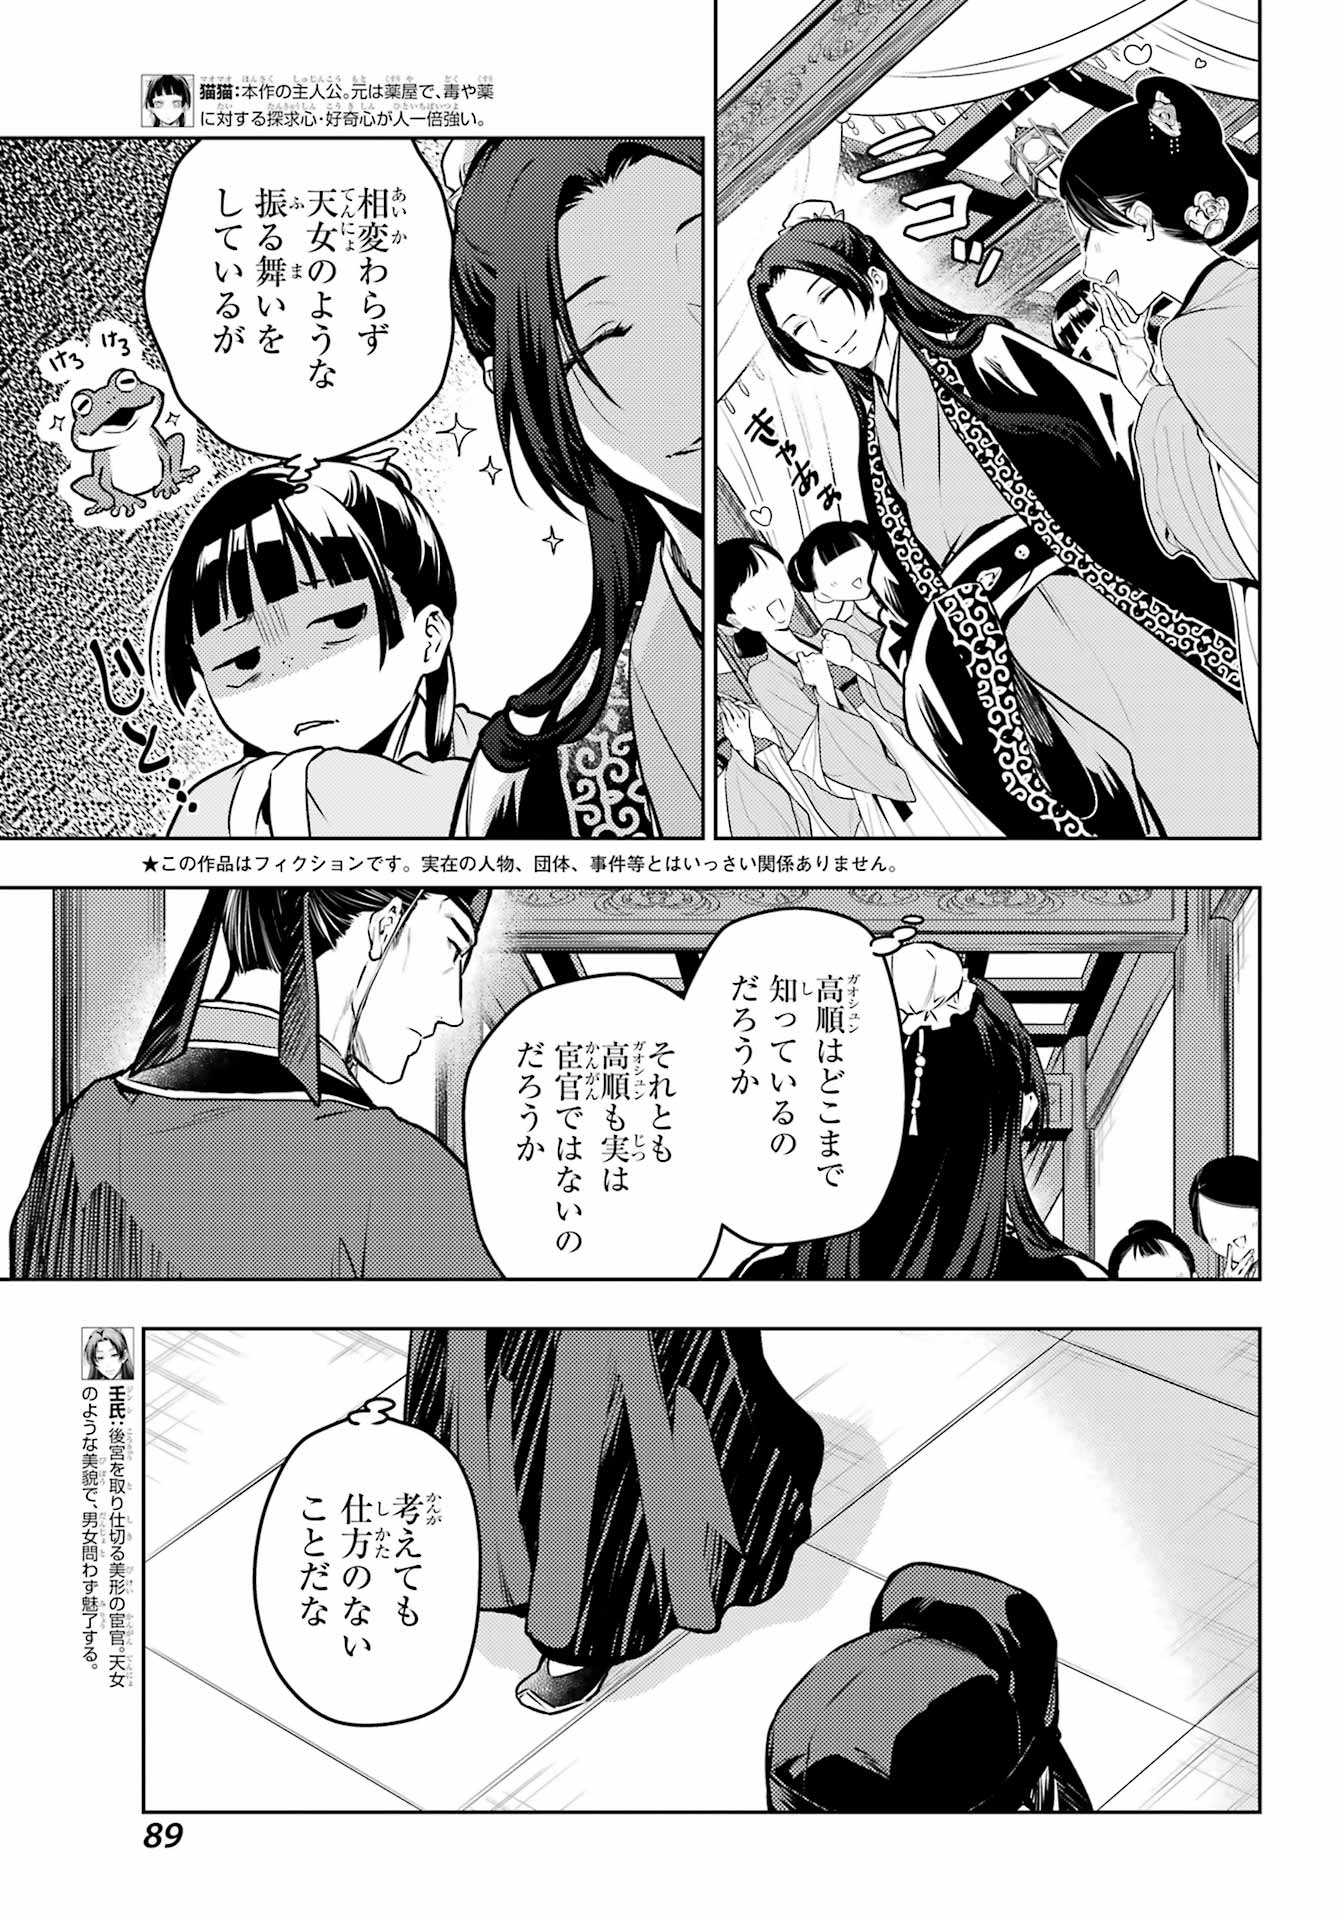 Kusuriya no Hitorigoto - Chapter 67 - Page 3